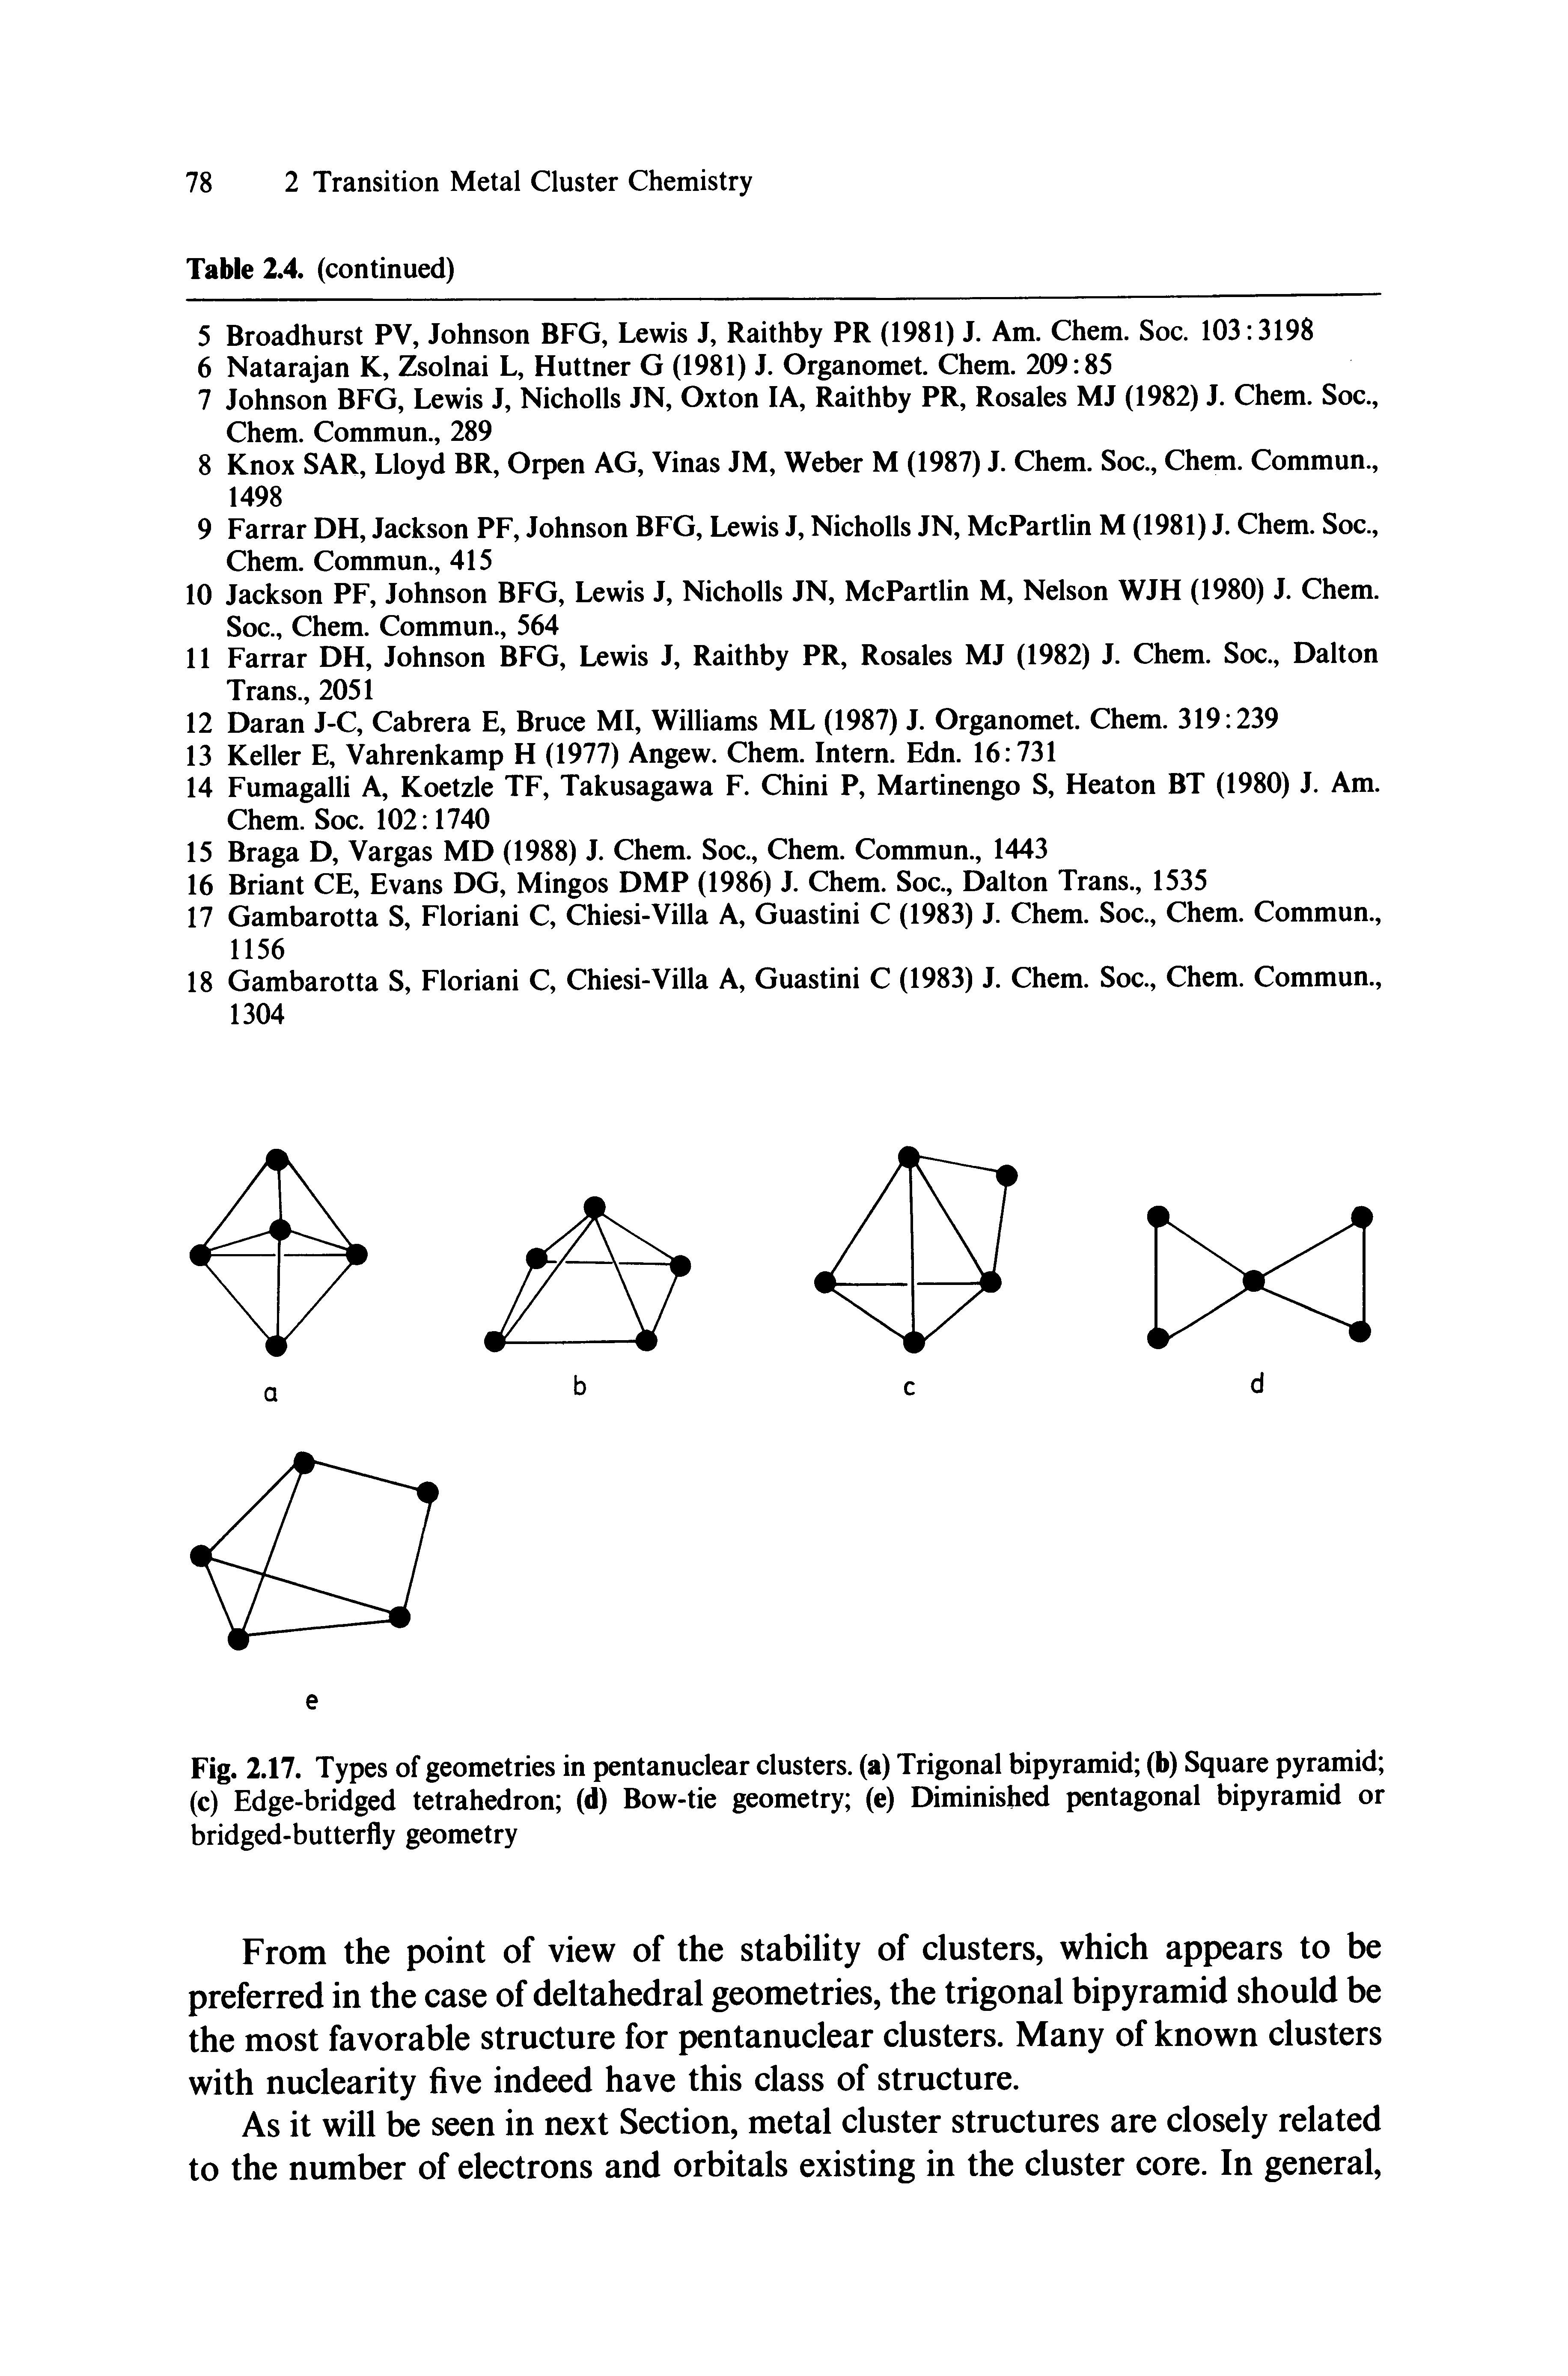 Fig. 2.17. Types of geometries in pentanuclear clusters, (a) Trigonal bipyramid (b) Square pyramid (c) Edge-bridged tetrahedron (d) Bow-tie geometry (e) Diminished pentagonal bipyramid or bridged-butterfly geometry...